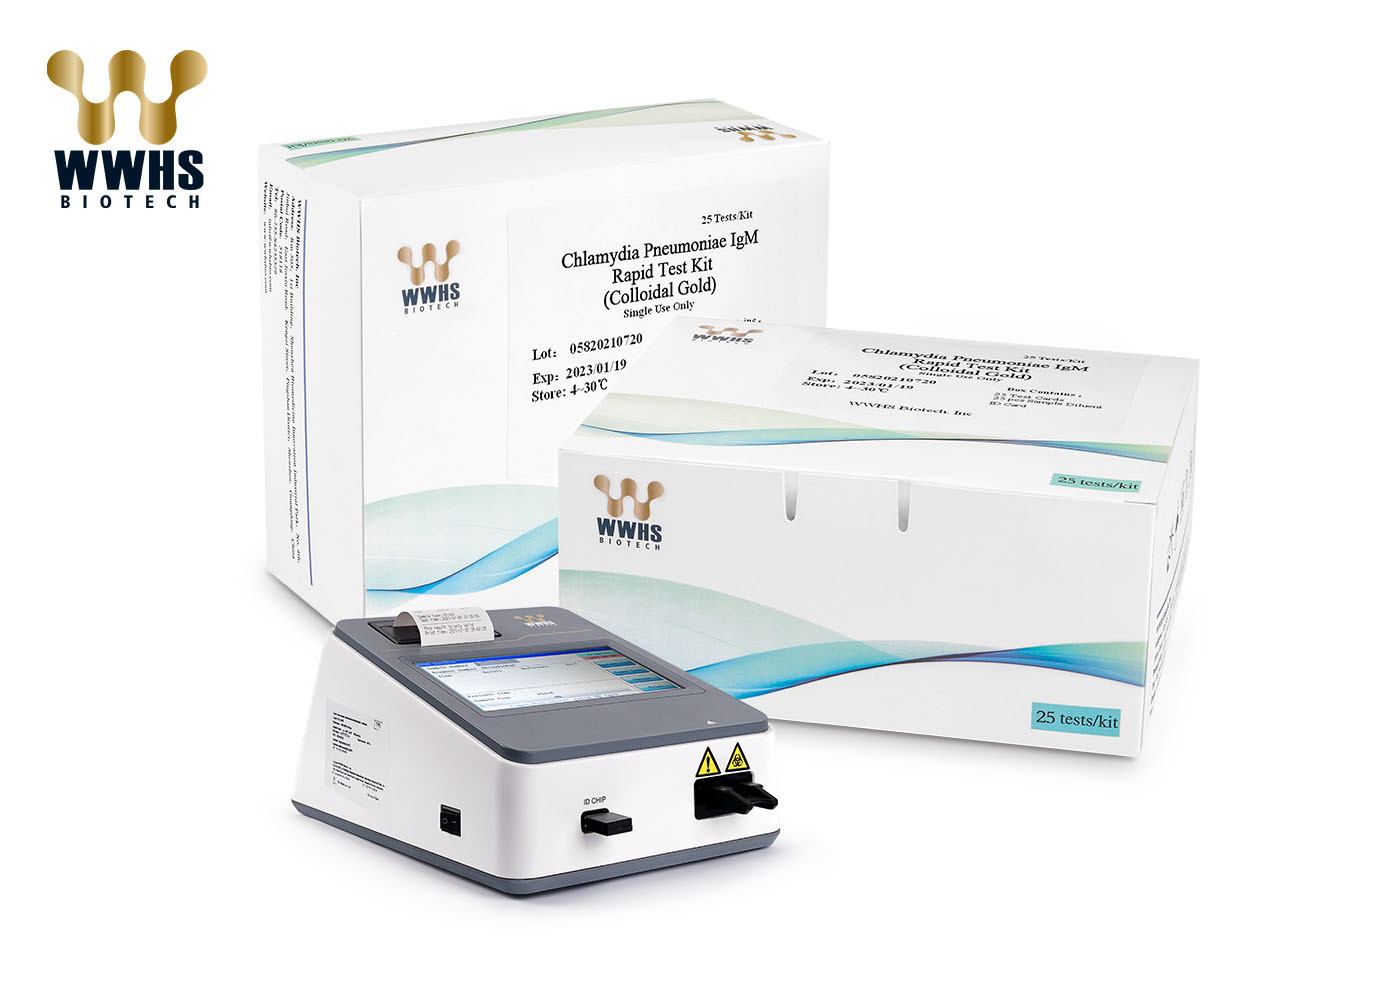 WWHS C.Pneumoniae IgM High Sensitivity Rapid Test Kit Infection IVD Clinical Diagnosis